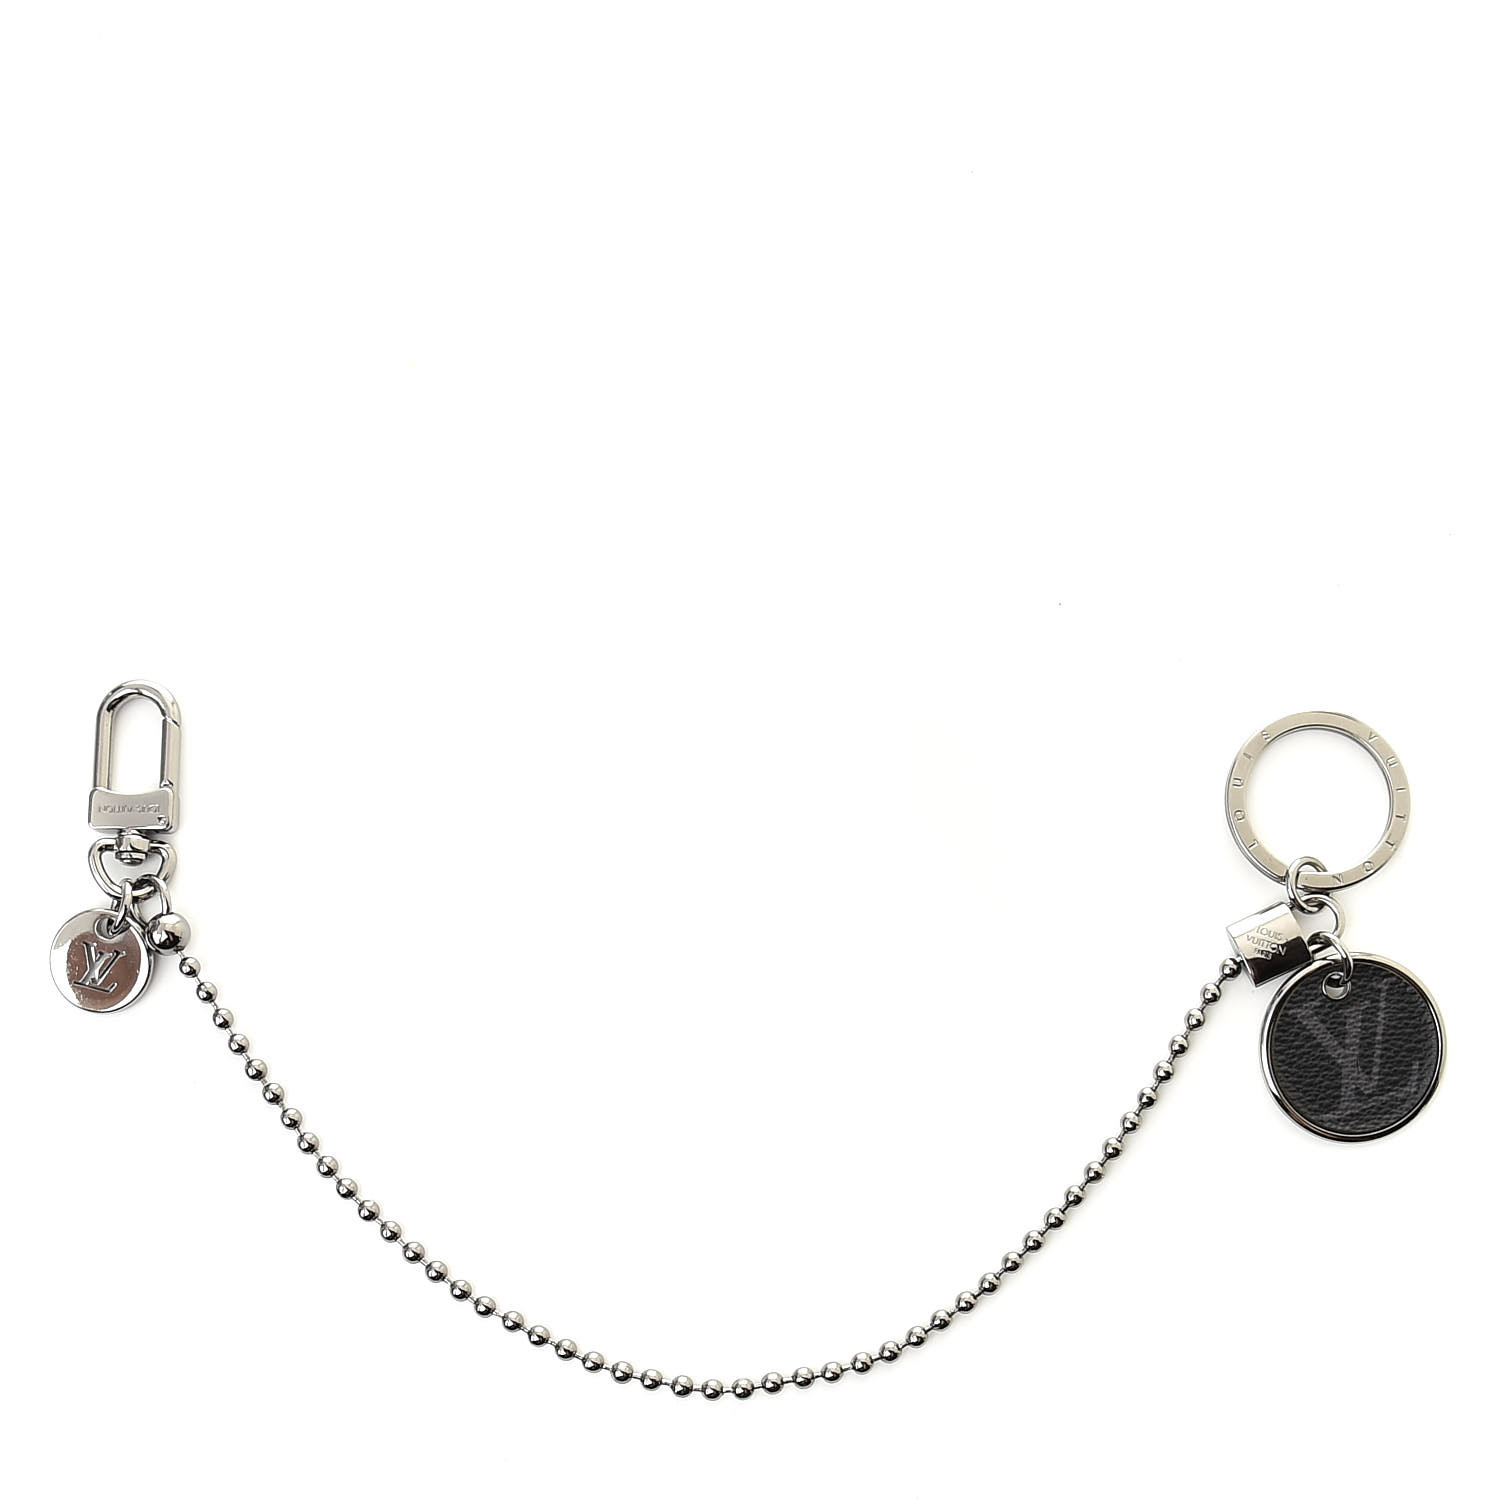 LOUIS VUITTON Monogram Eclipse Calfskin ID Pocket Key Chain Bag Charm and Key Holder 514224